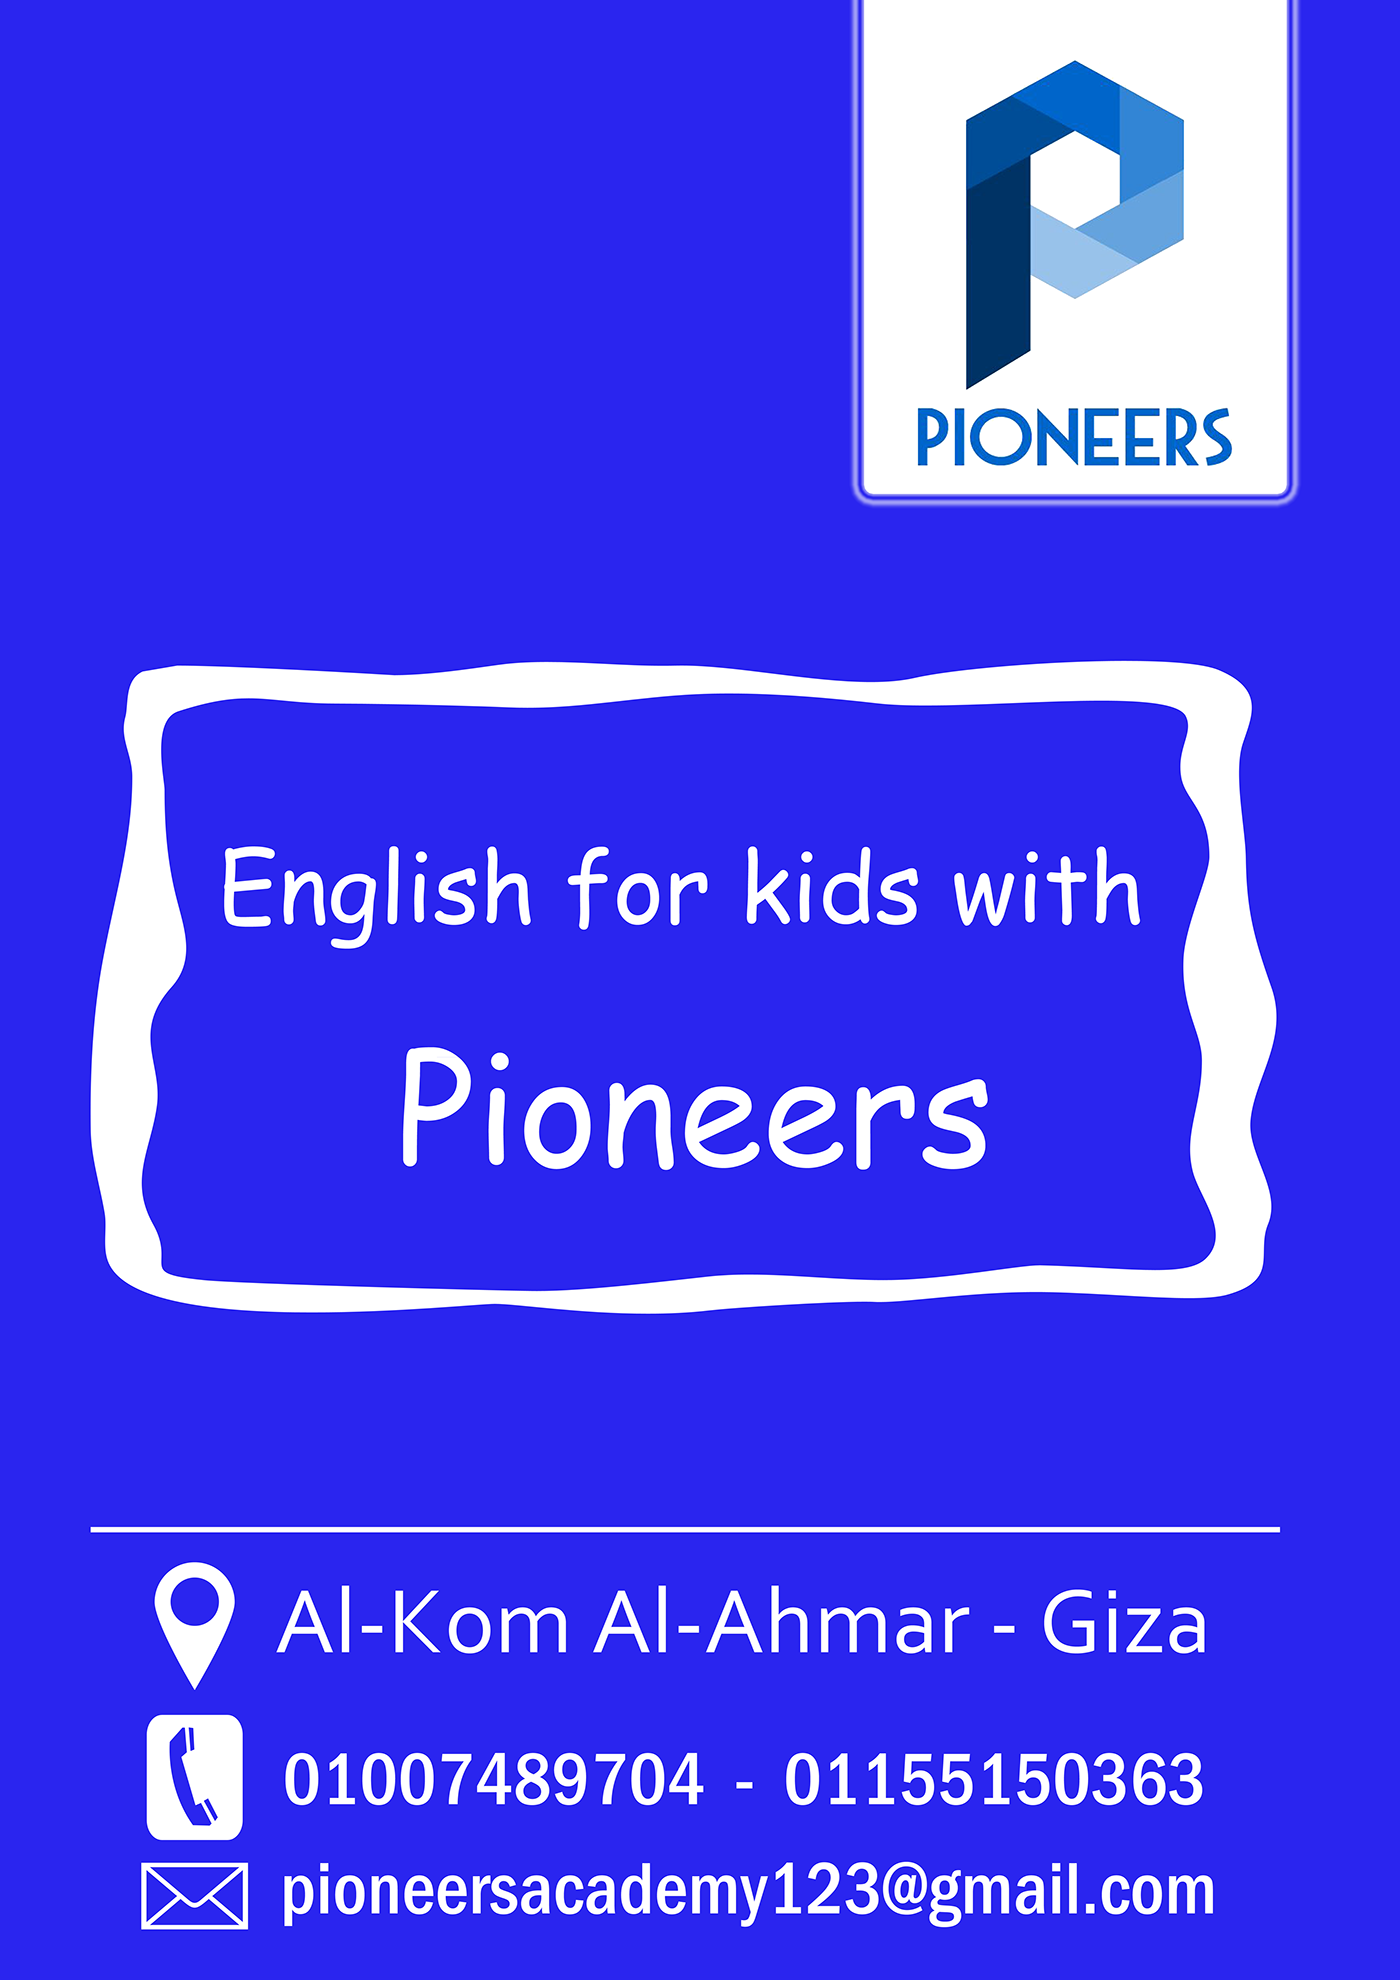 Pioneers Academy